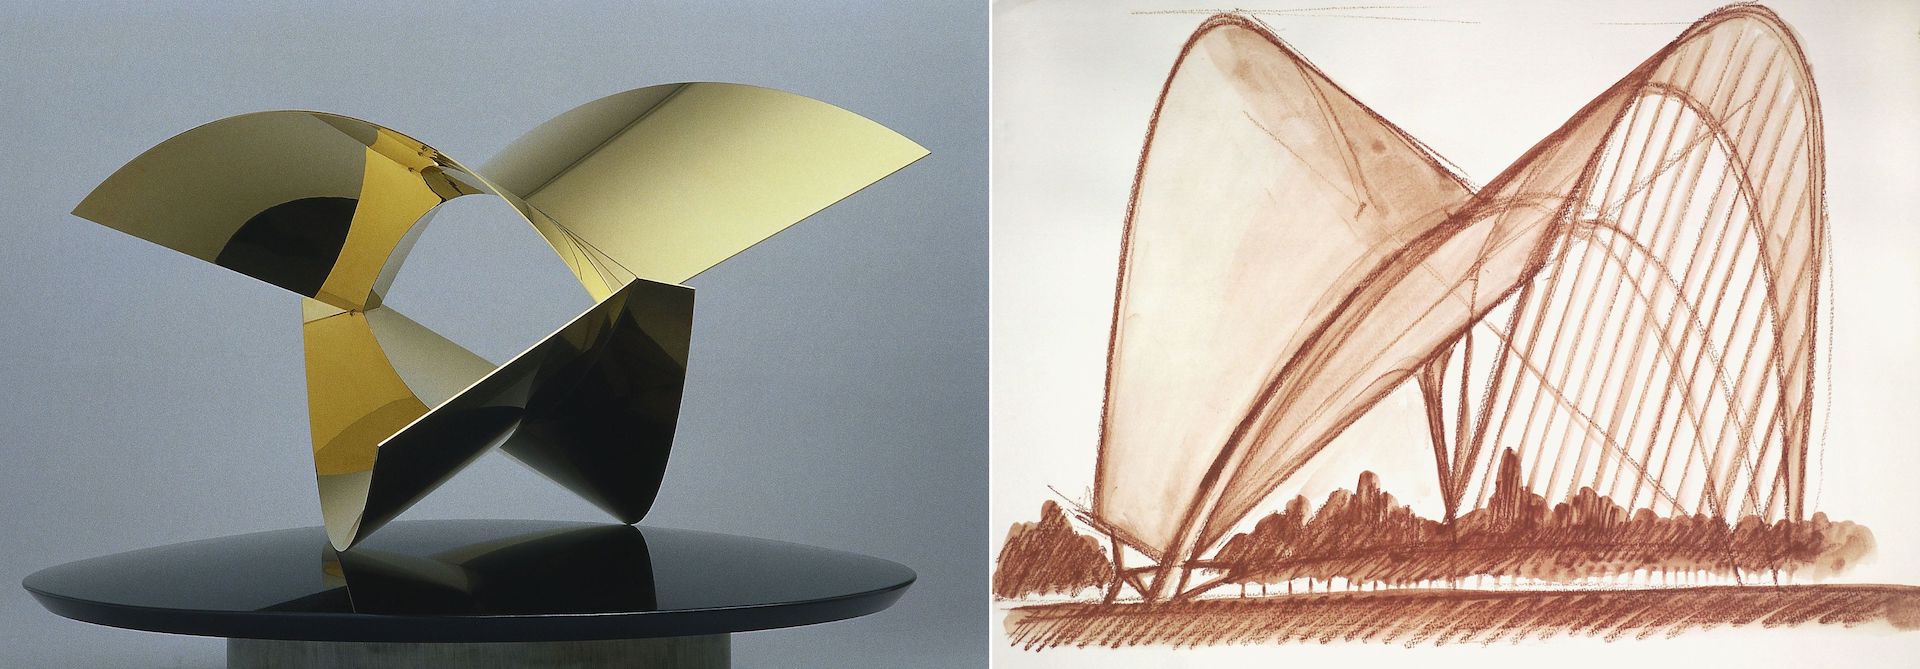 Calatrava's Mother and Child sculpture, 1990, and Oculus Transportation Hub sketch. Photos © Santiago Calatrava LLC